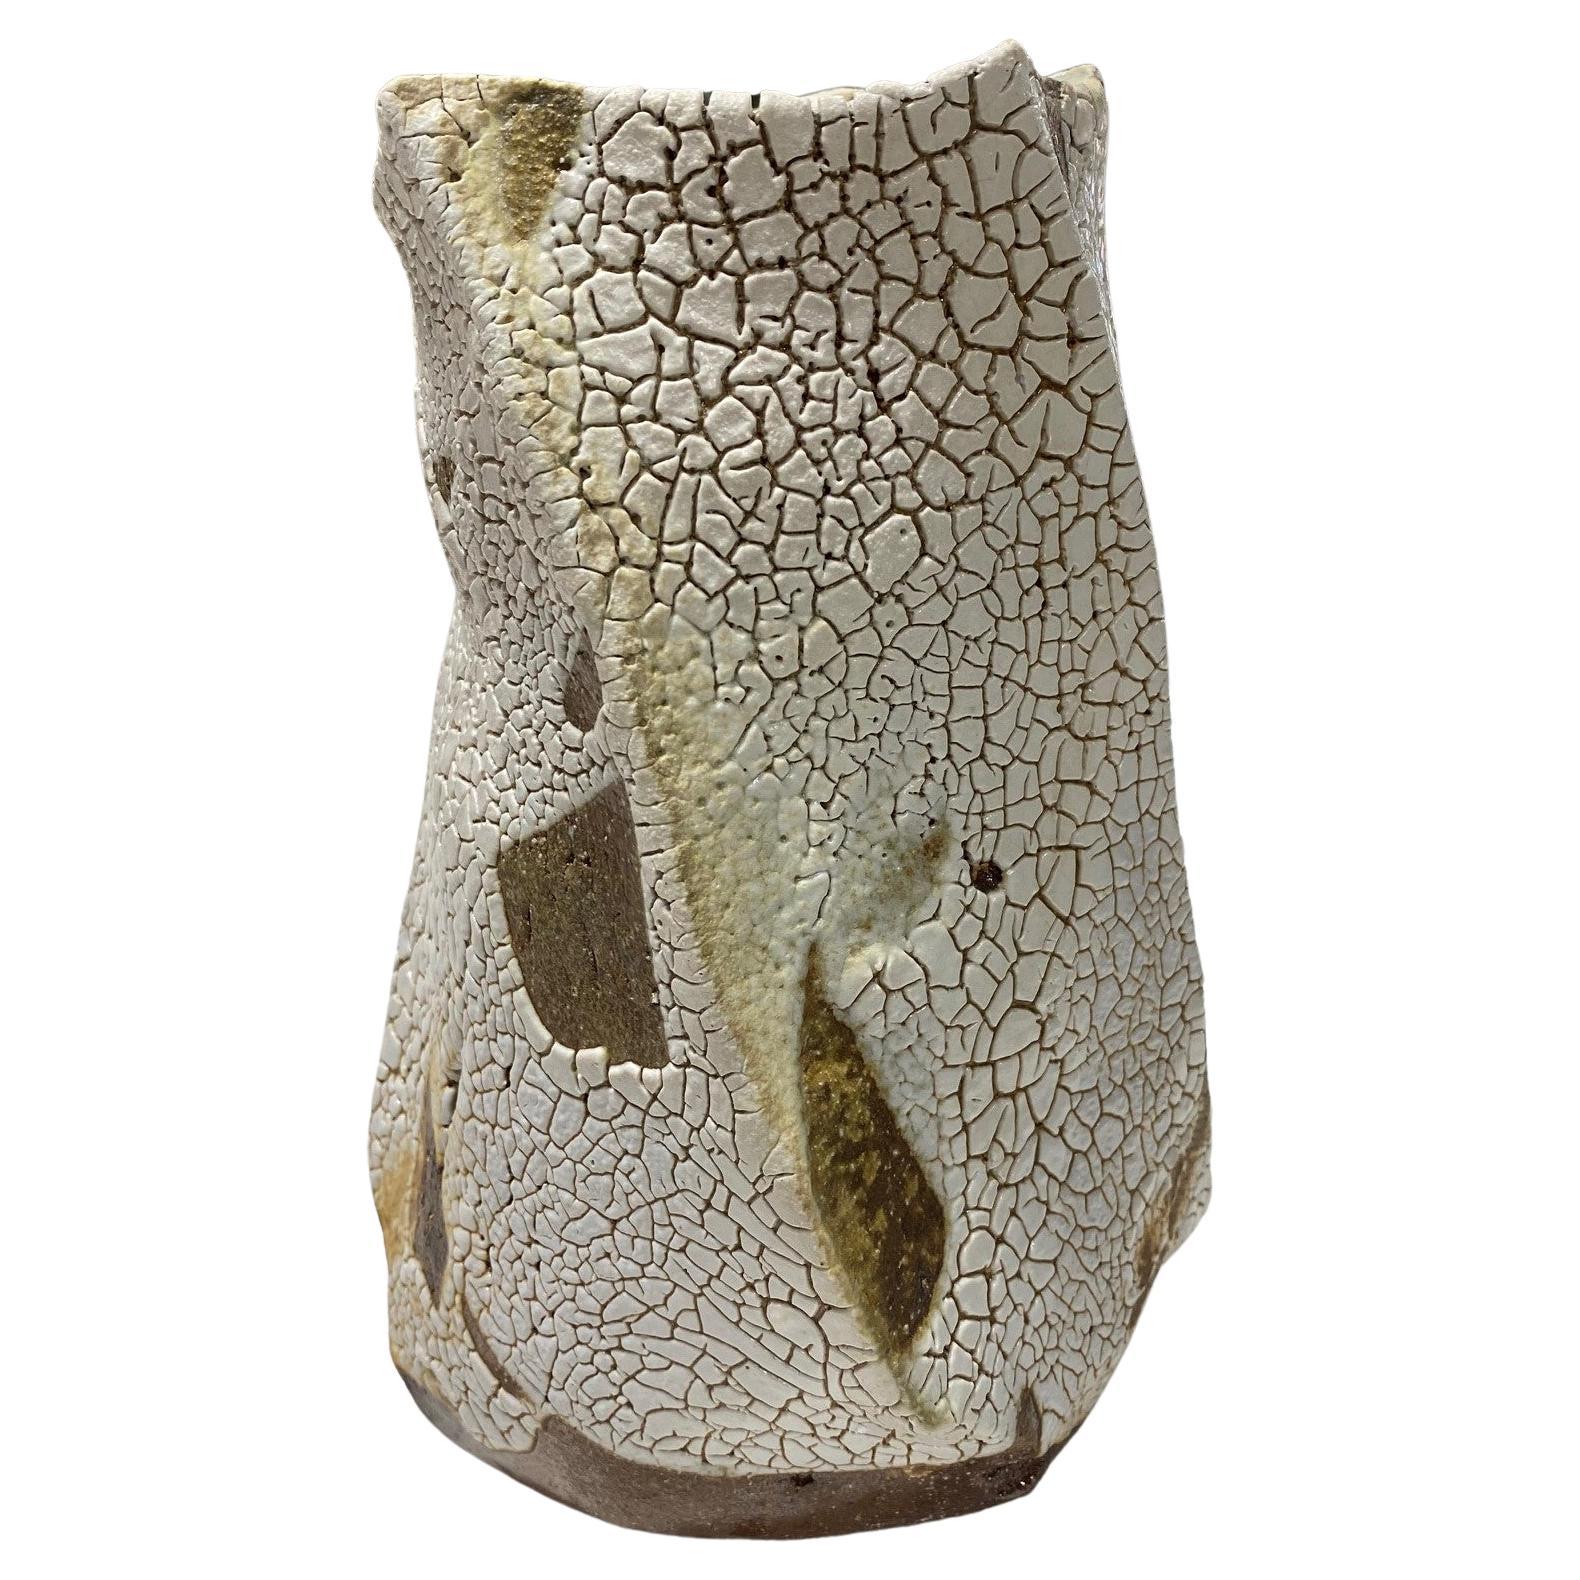 Peter Callas Signed Wood Fired Studio Pottery Mentori Vase Sculpture Vessel